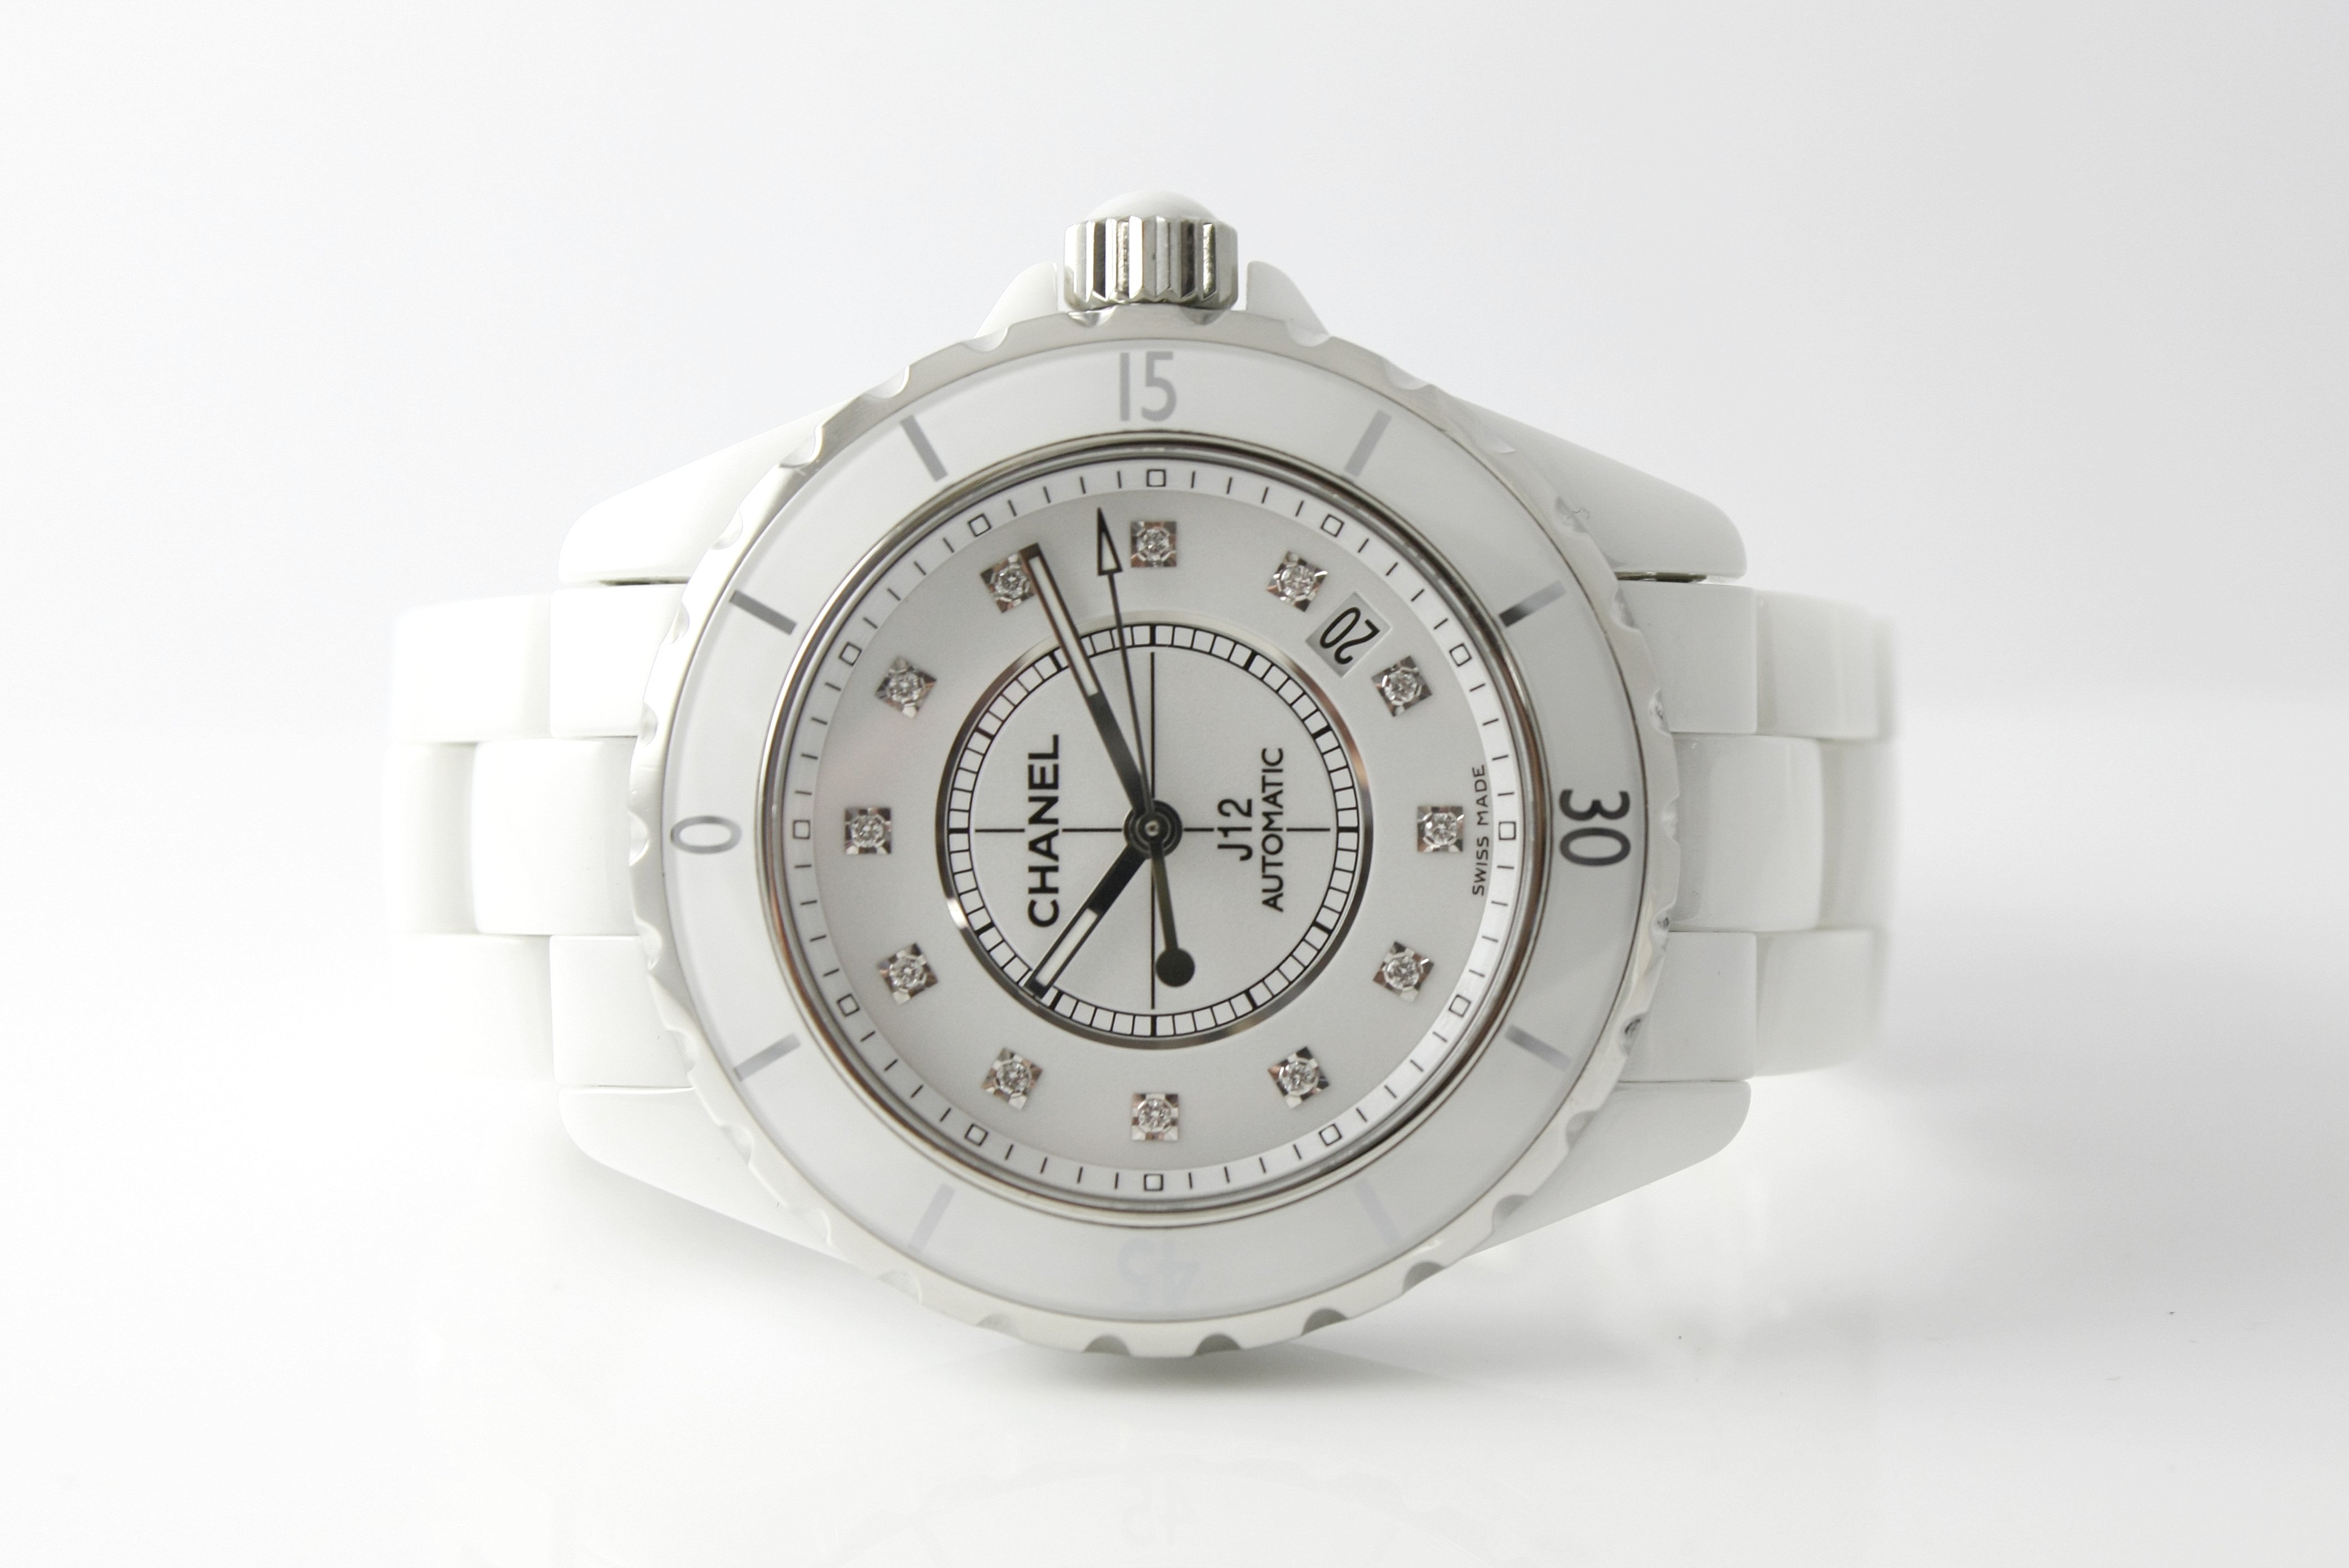 Chanel J12 Ceramic Diamond Watch - $3,300